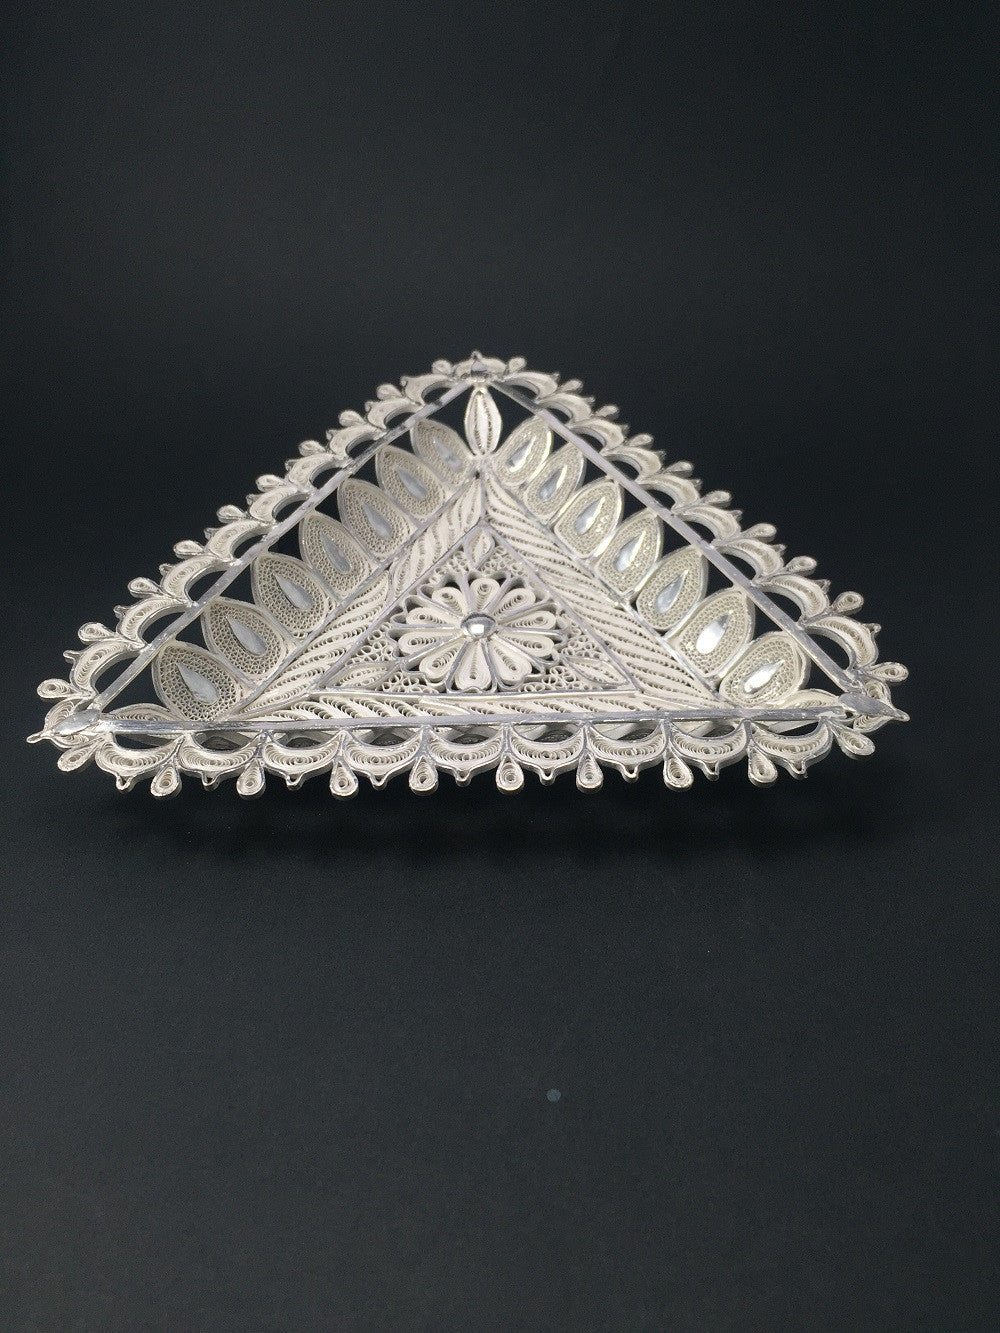 Silver Filigree Triangular Plate